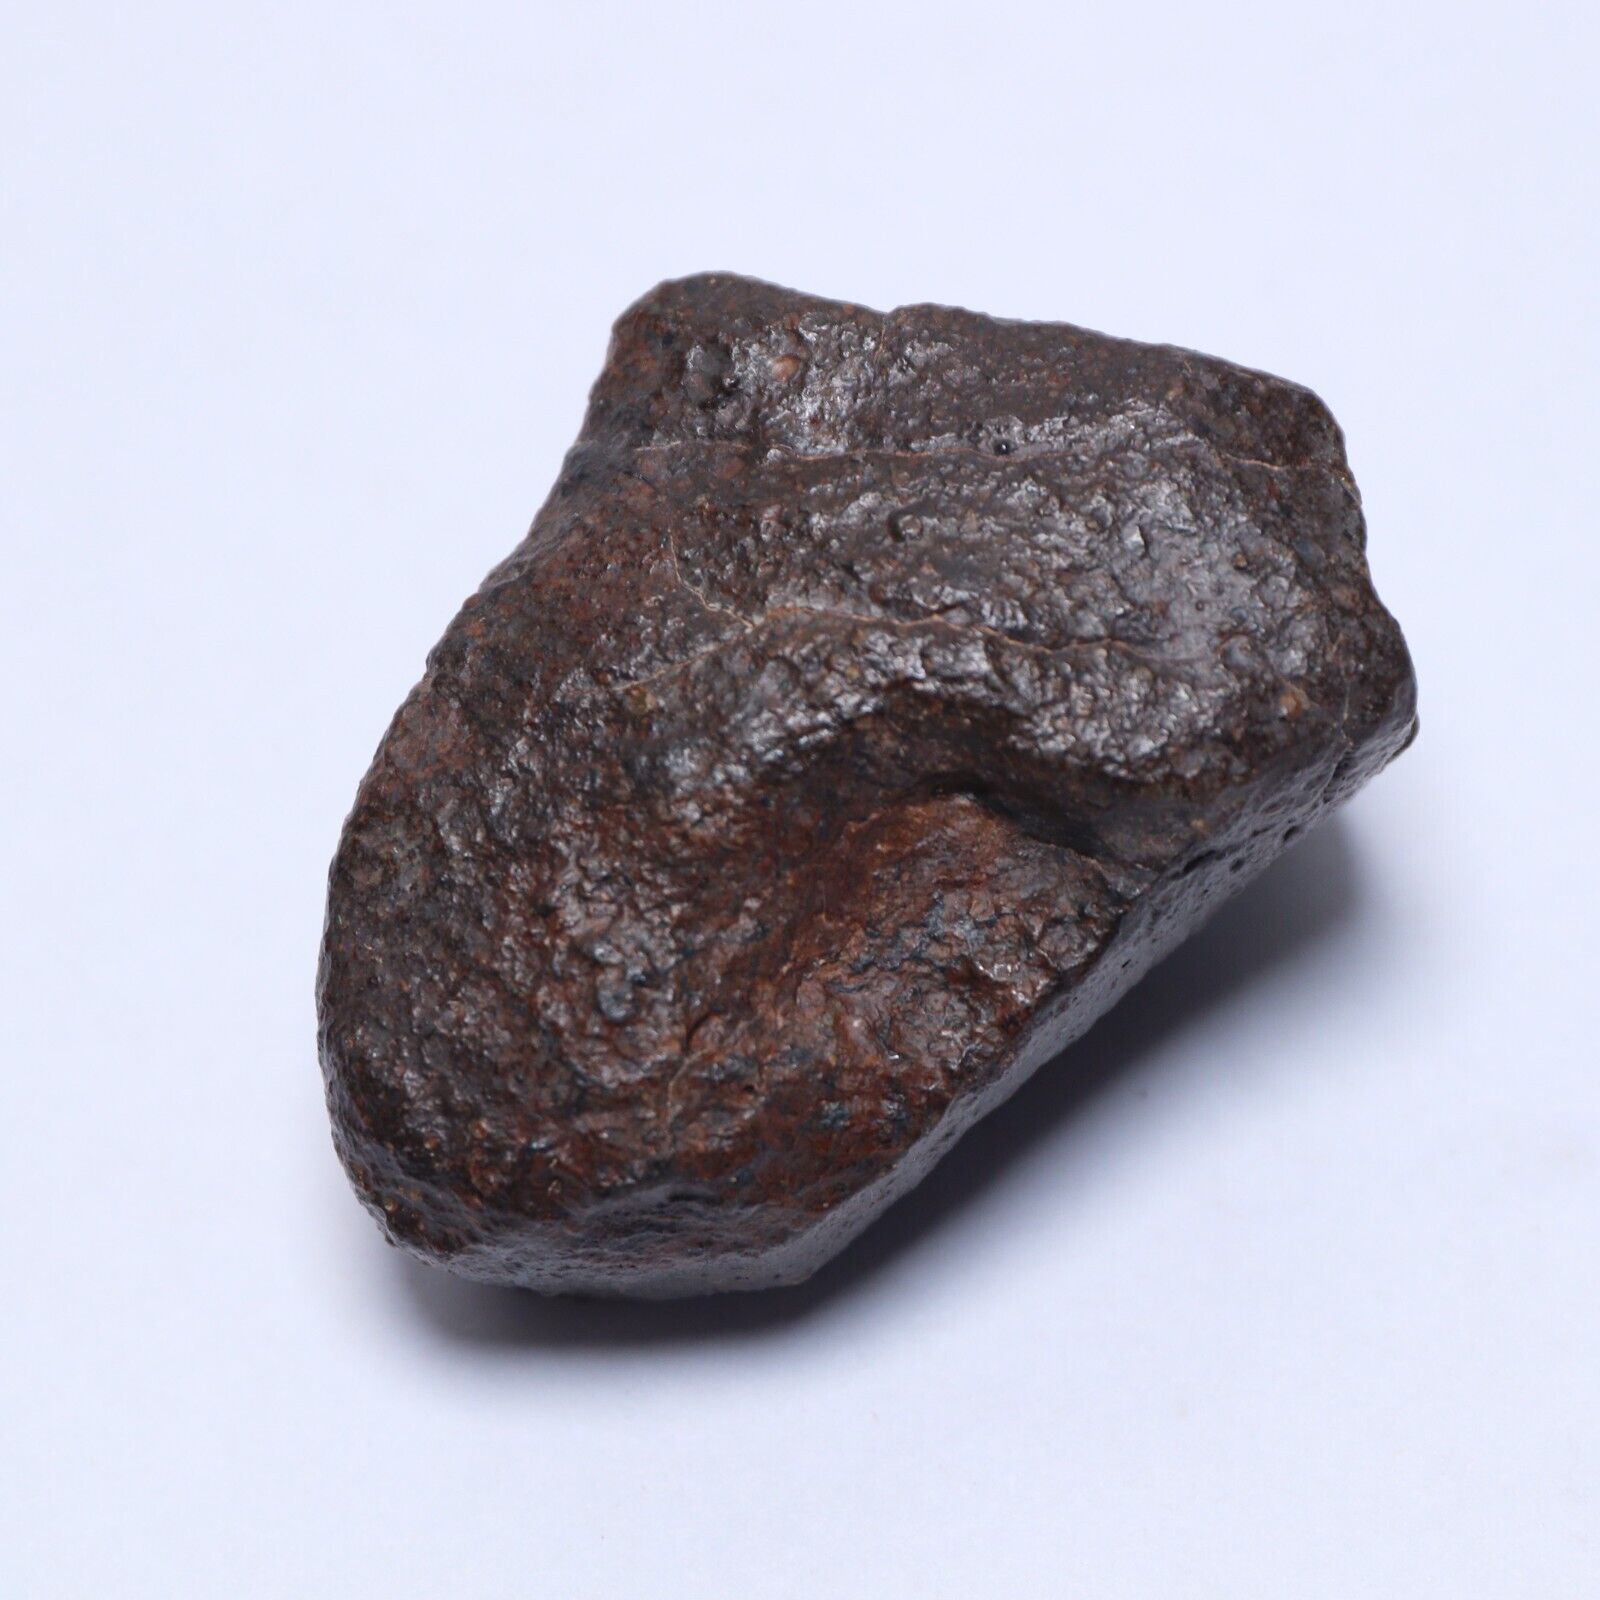 59g Unclassified chondrite, NWA meteorite B2630